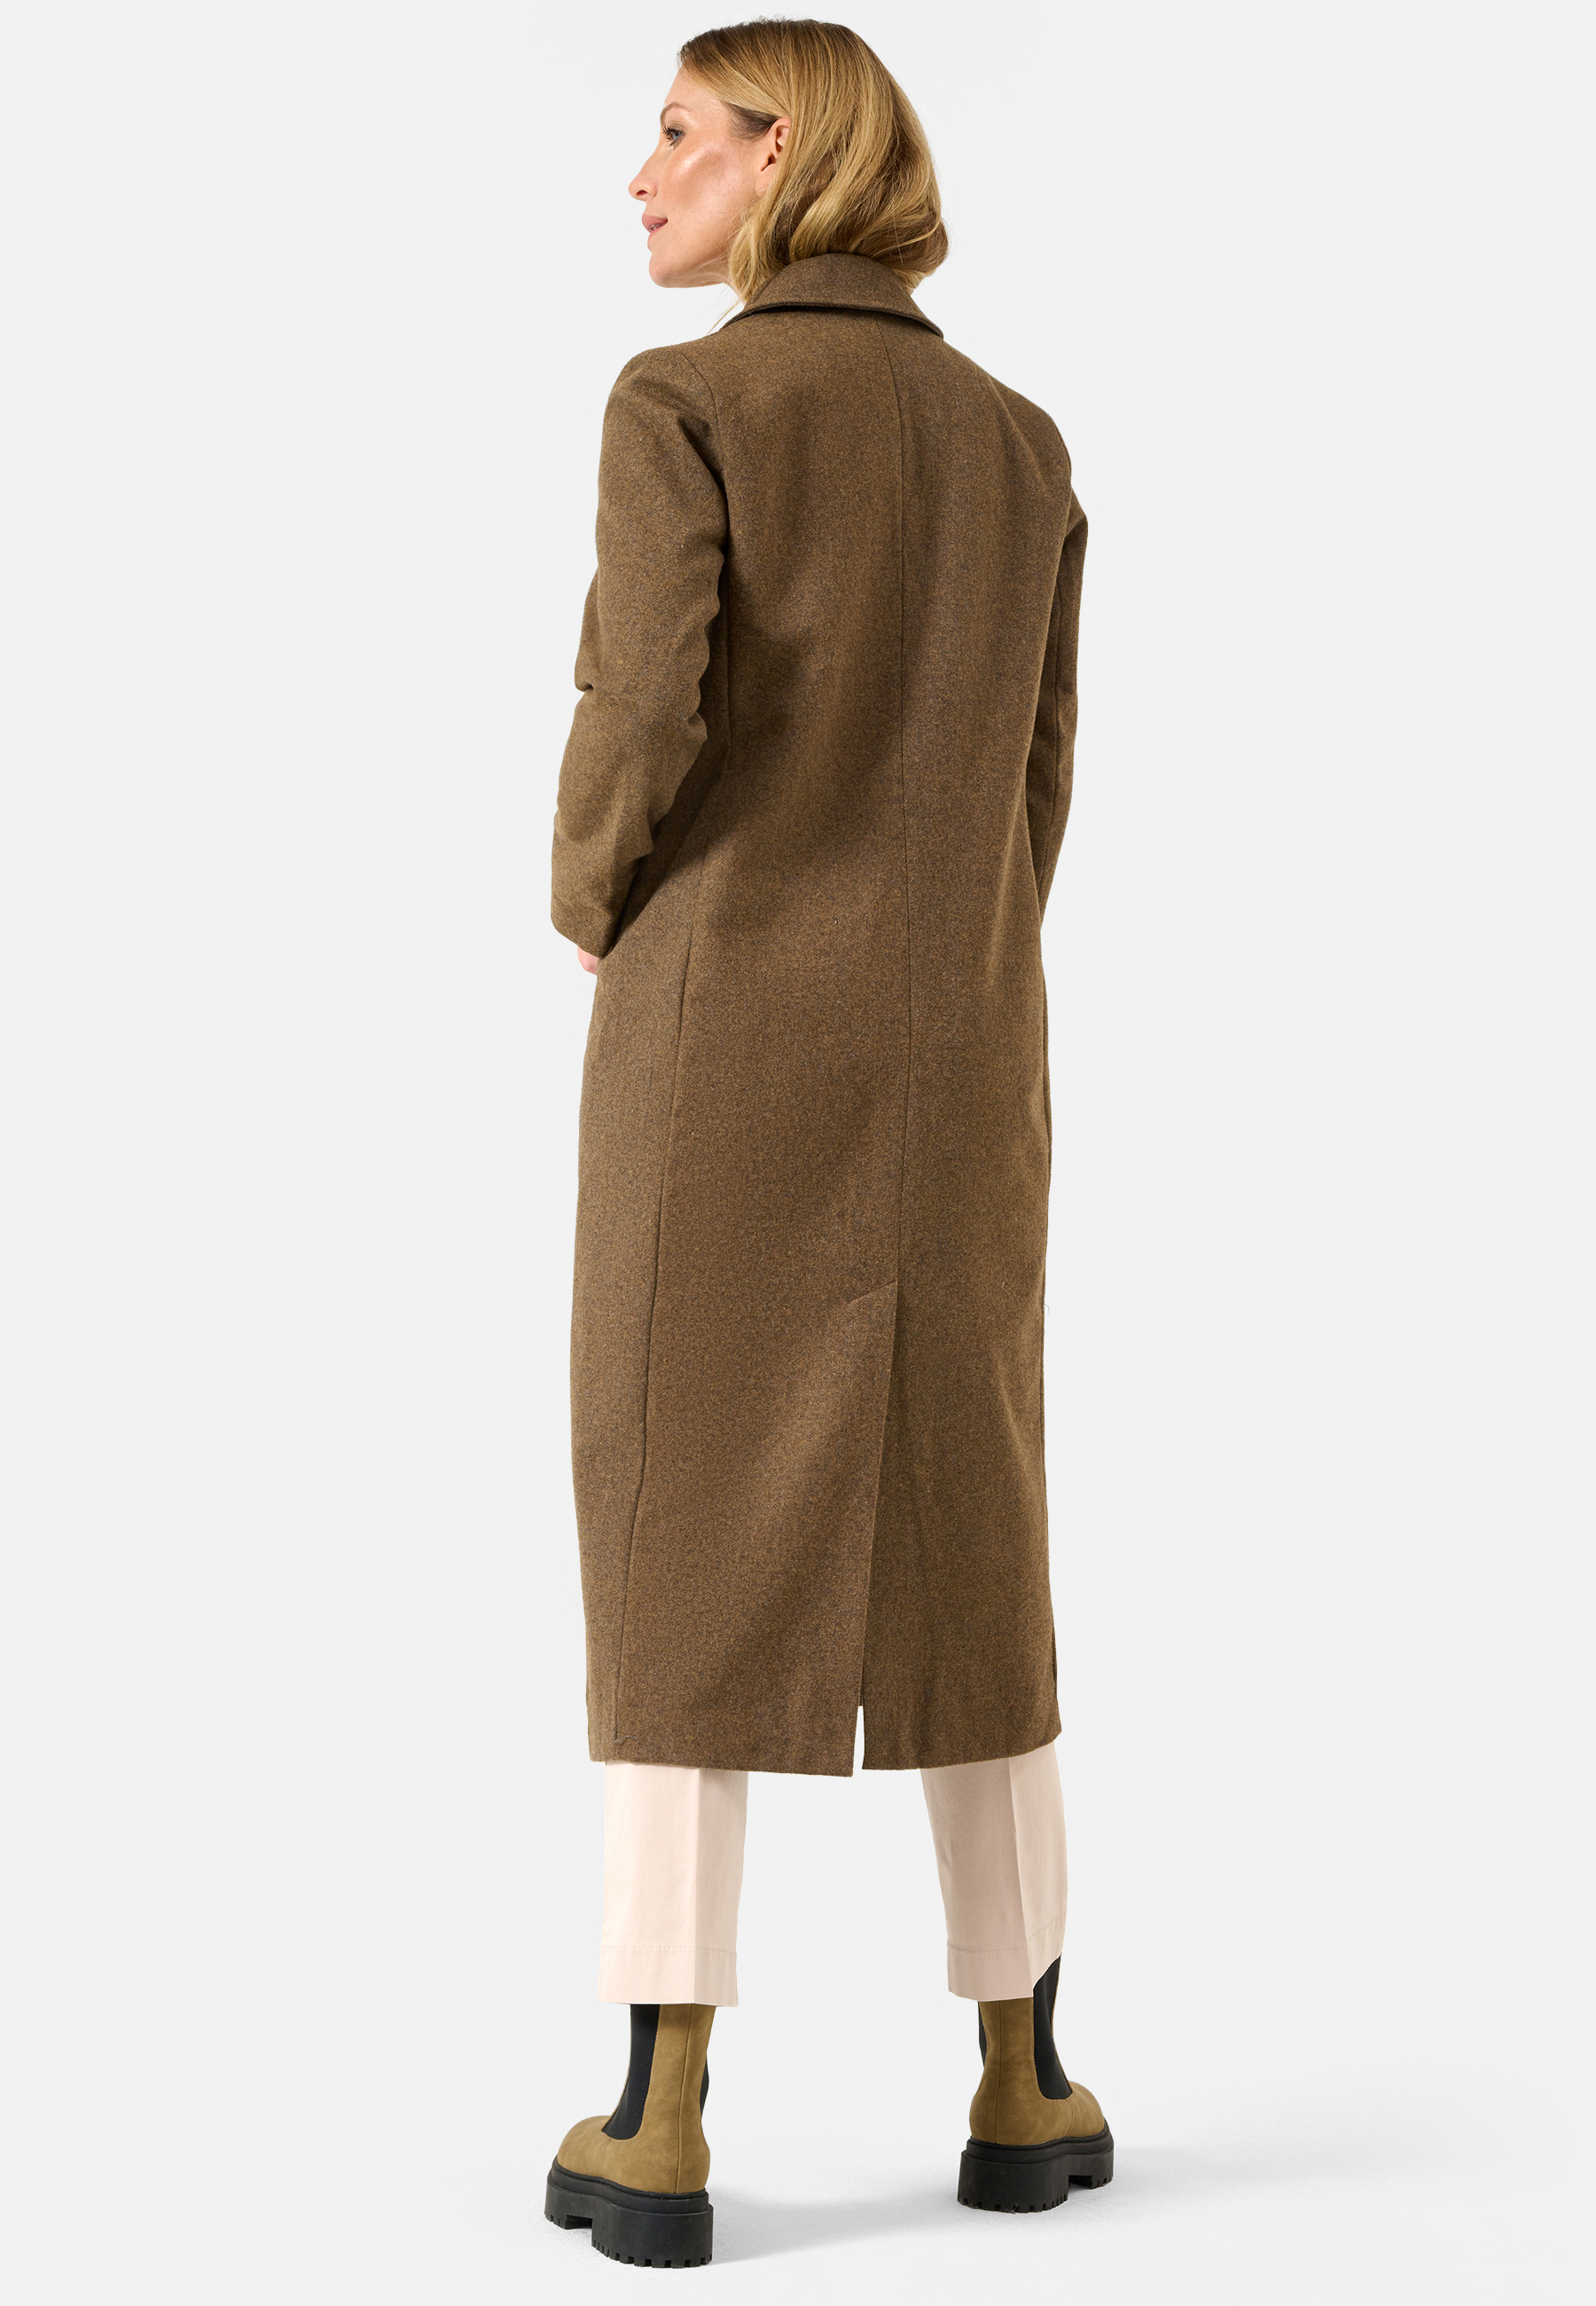 Damen Textil Mantel Alberta in Braun  von Ricano, Rückansicht an Model